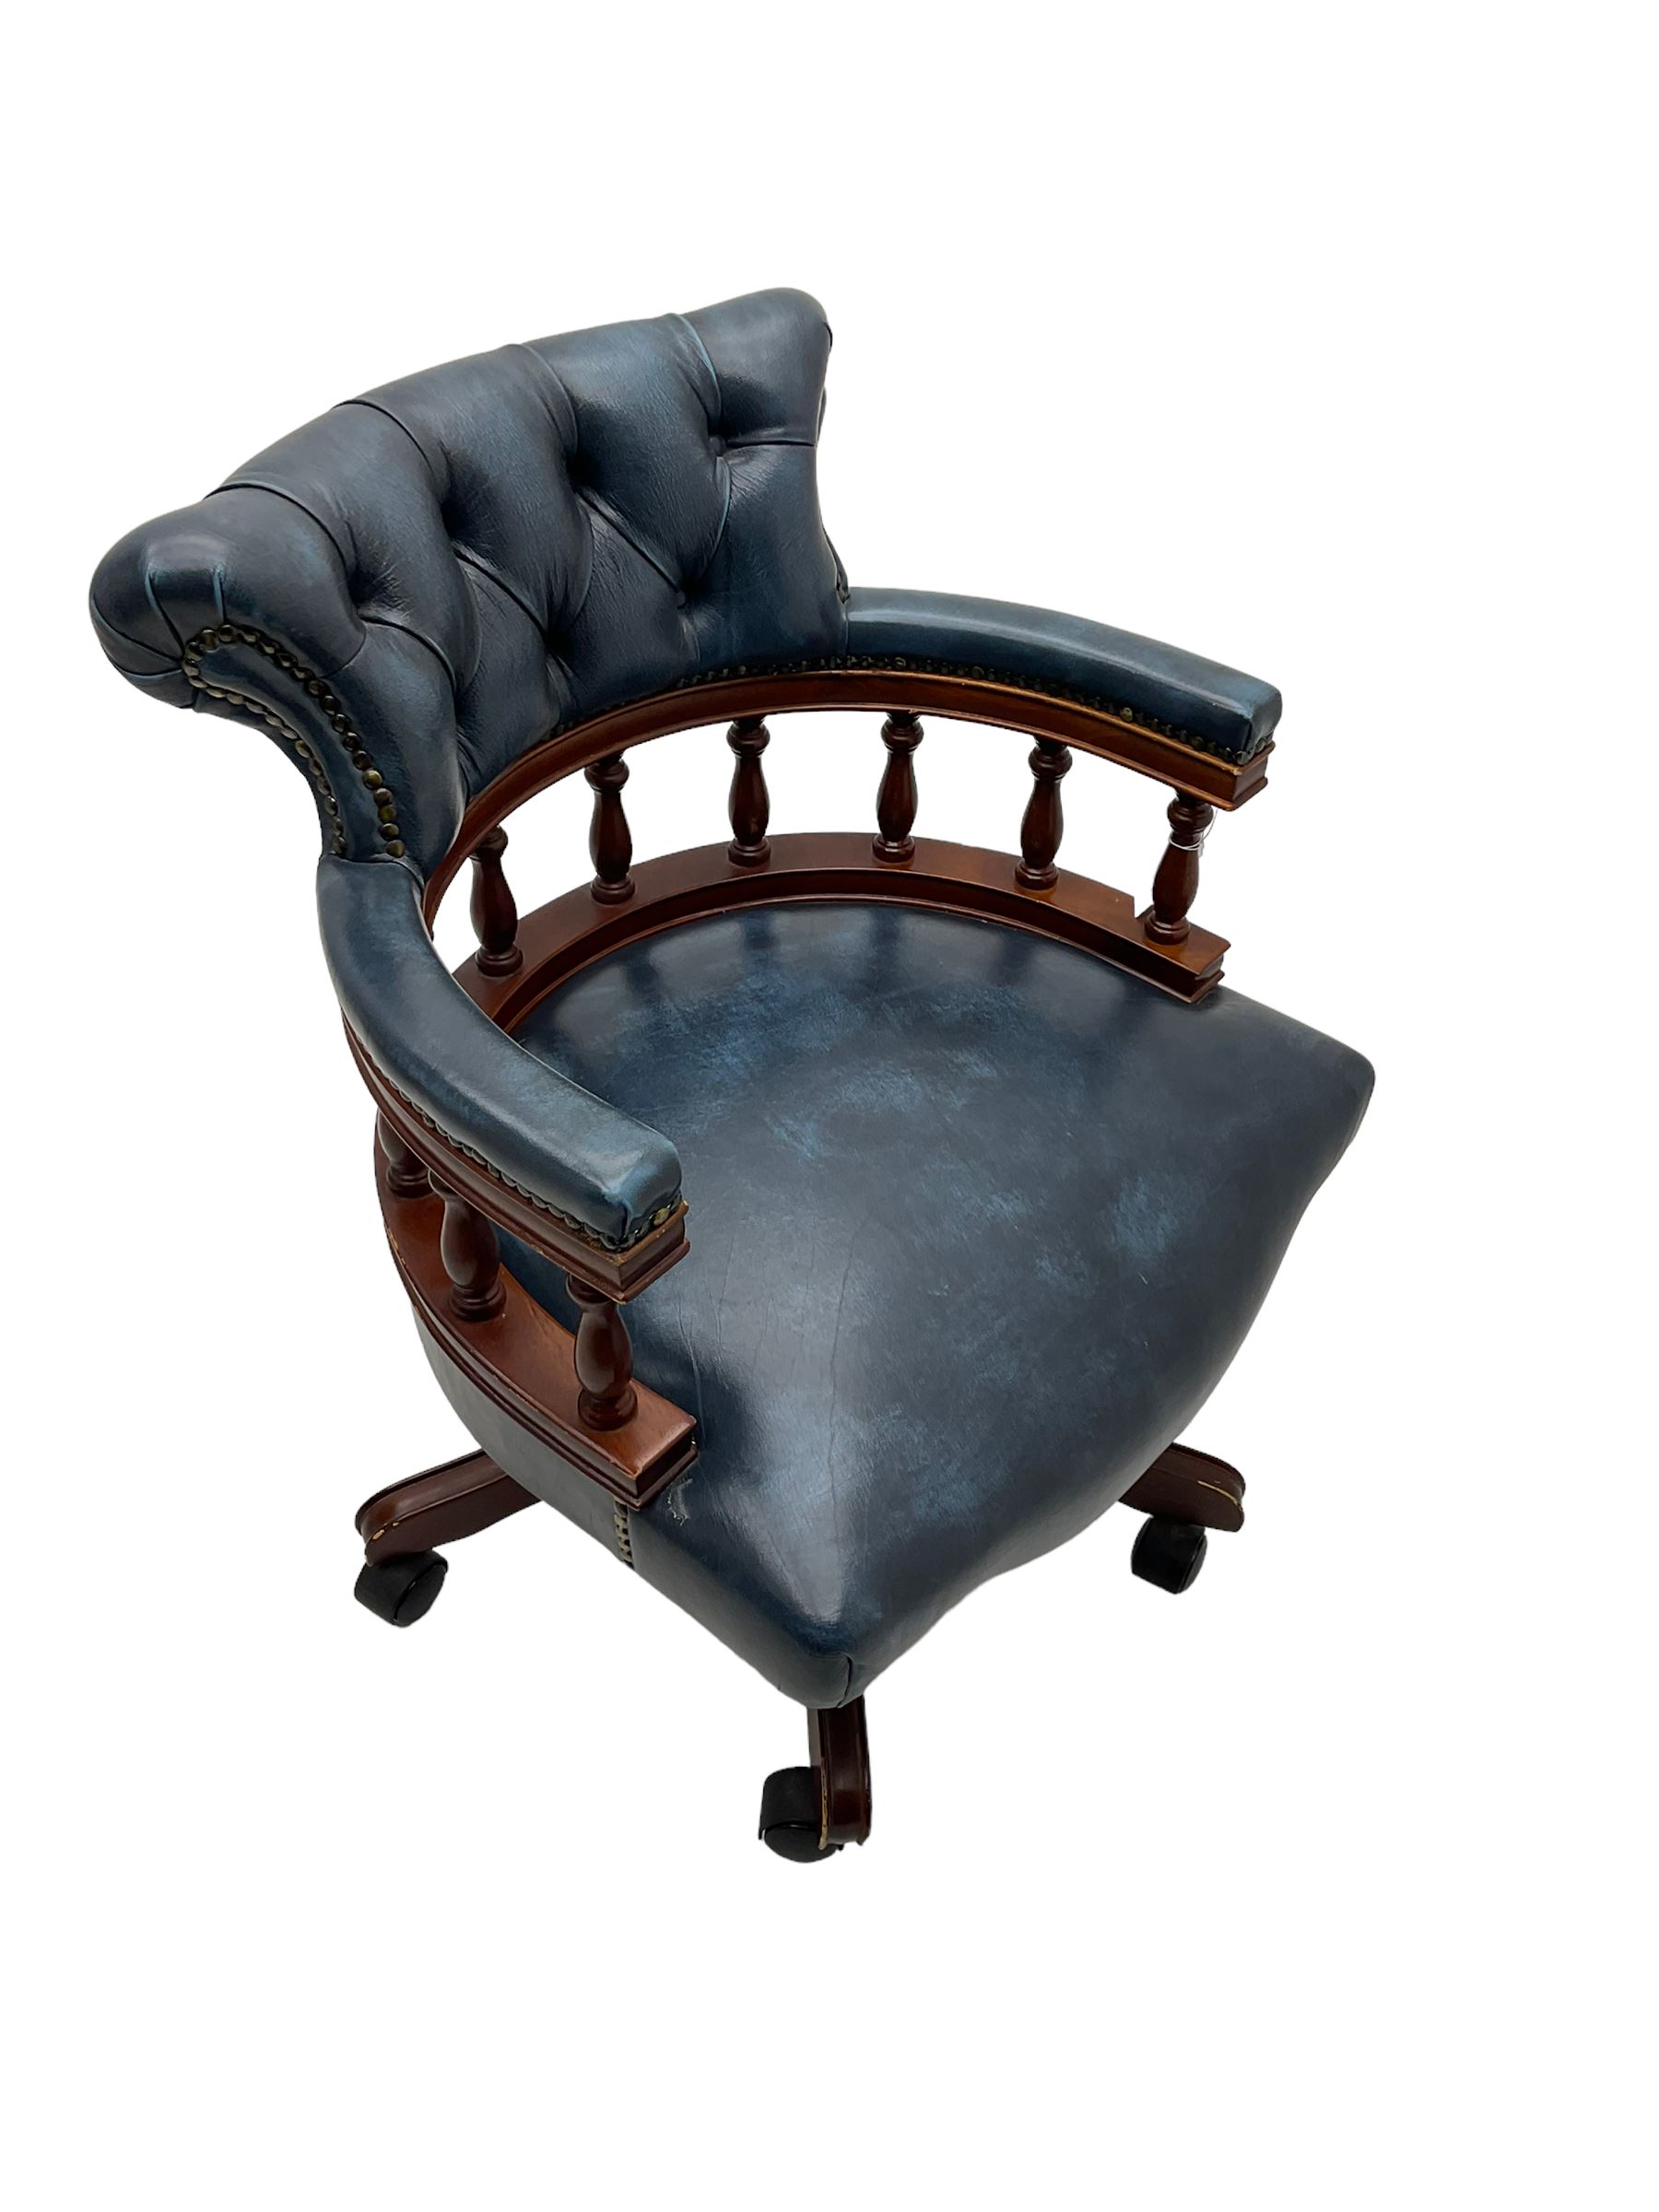 Captains swivel desk chair - Image 6 of 6